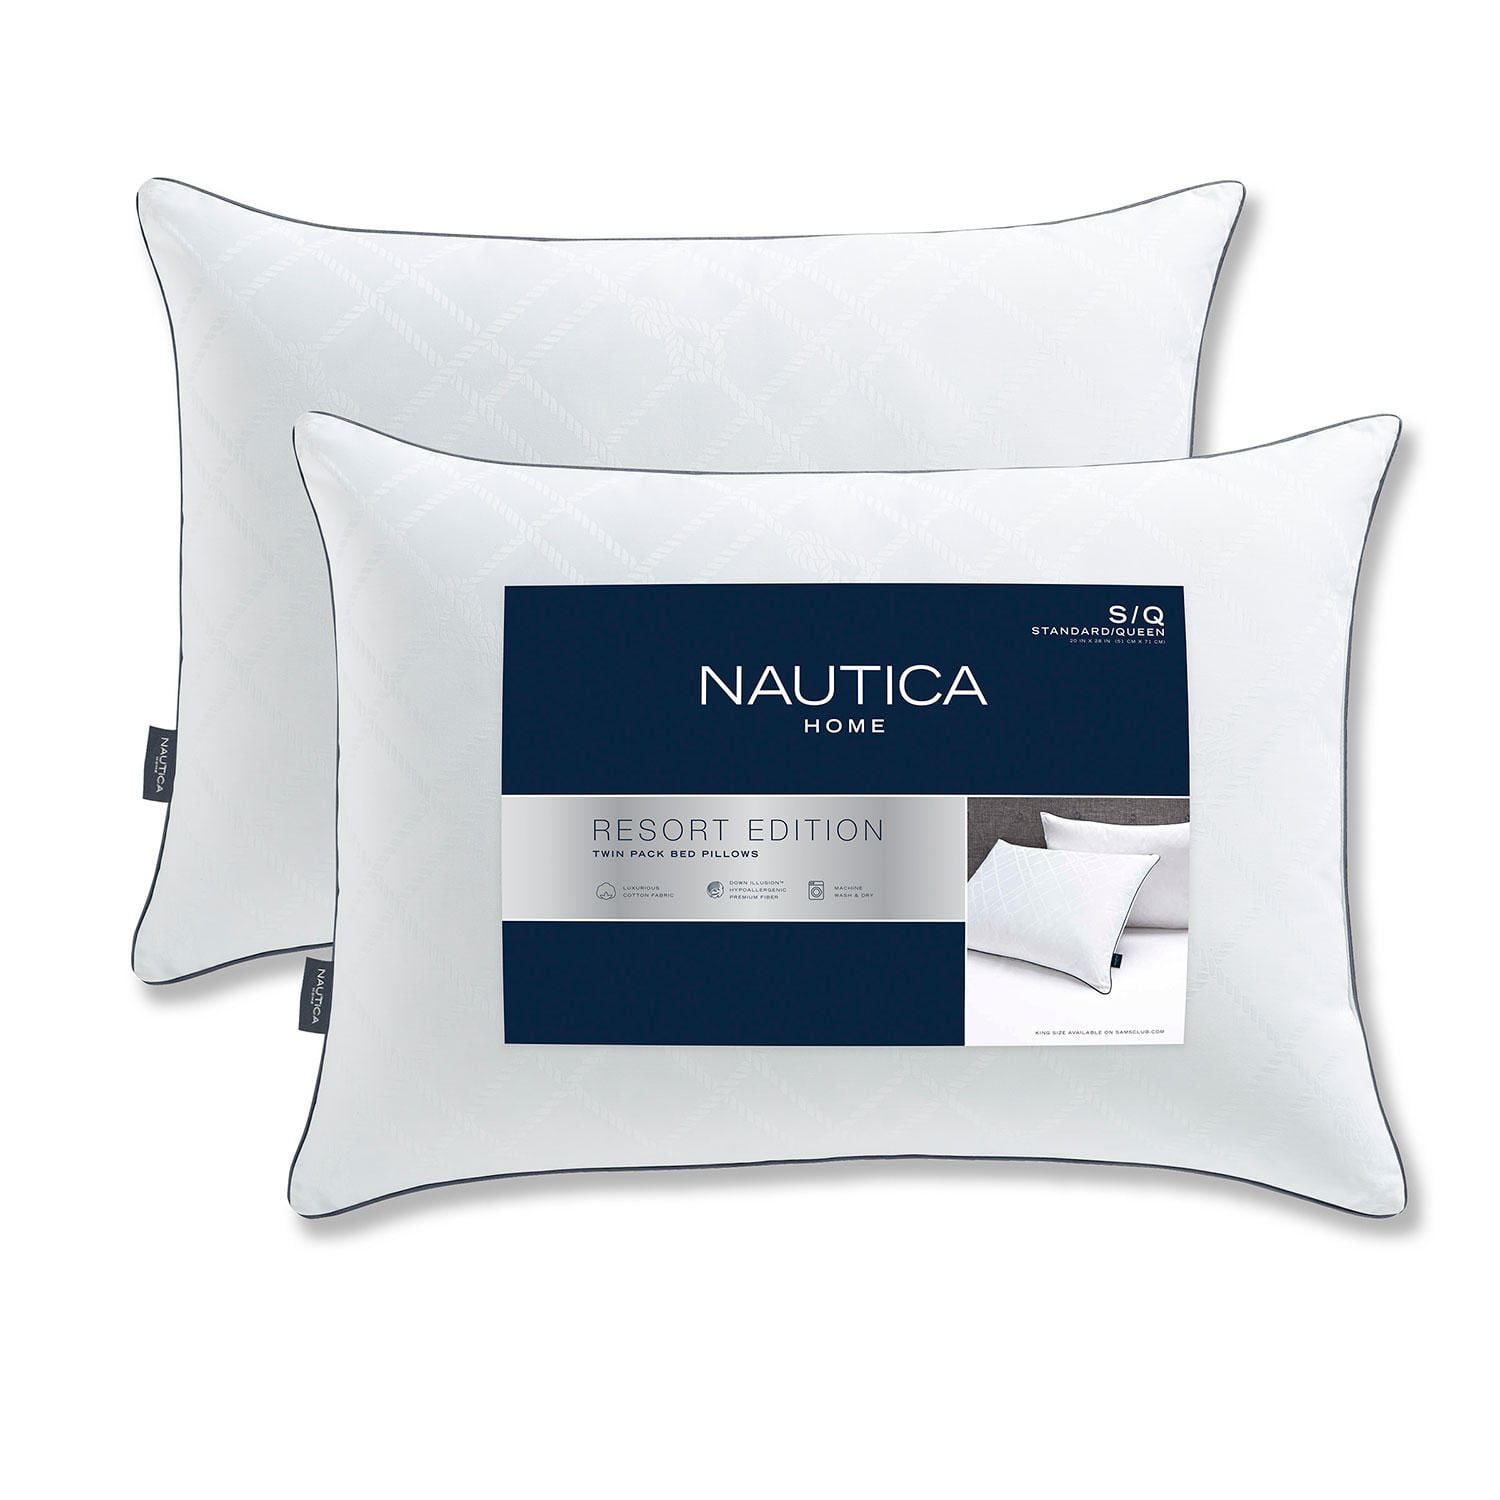 Eco-friendly Nautica Pillows: 15 Surprising Ways They